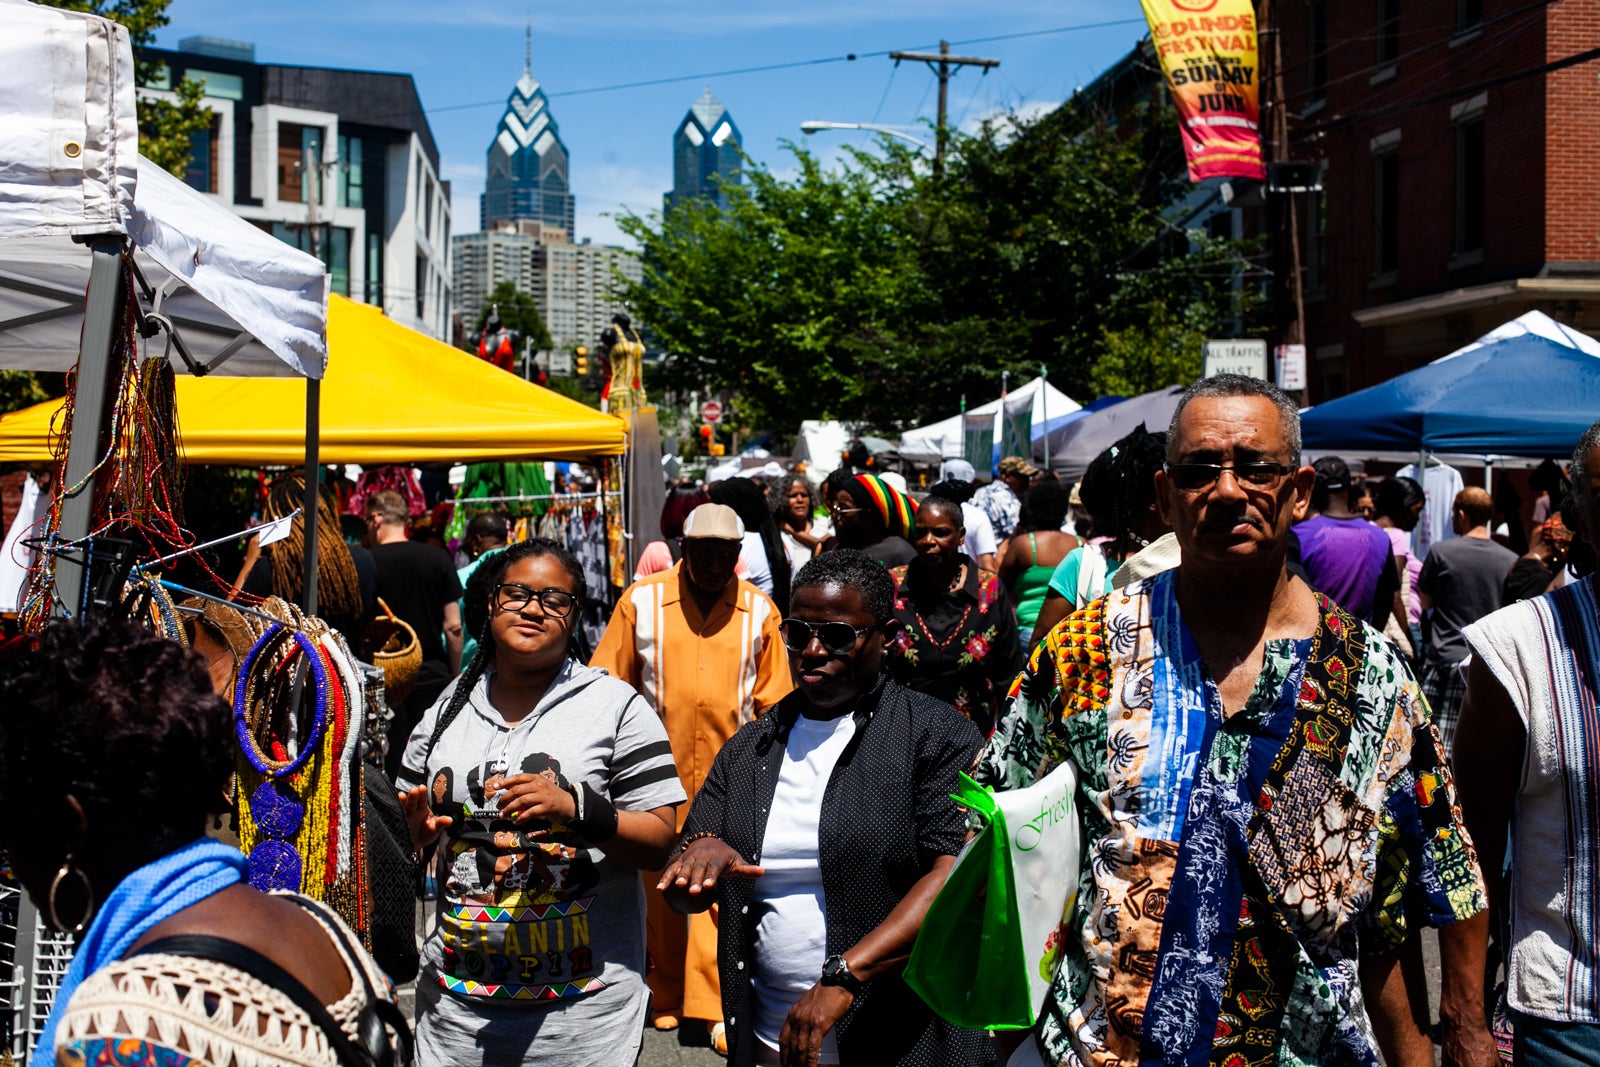 Philly revs up for return of Odunde Festival WHYY